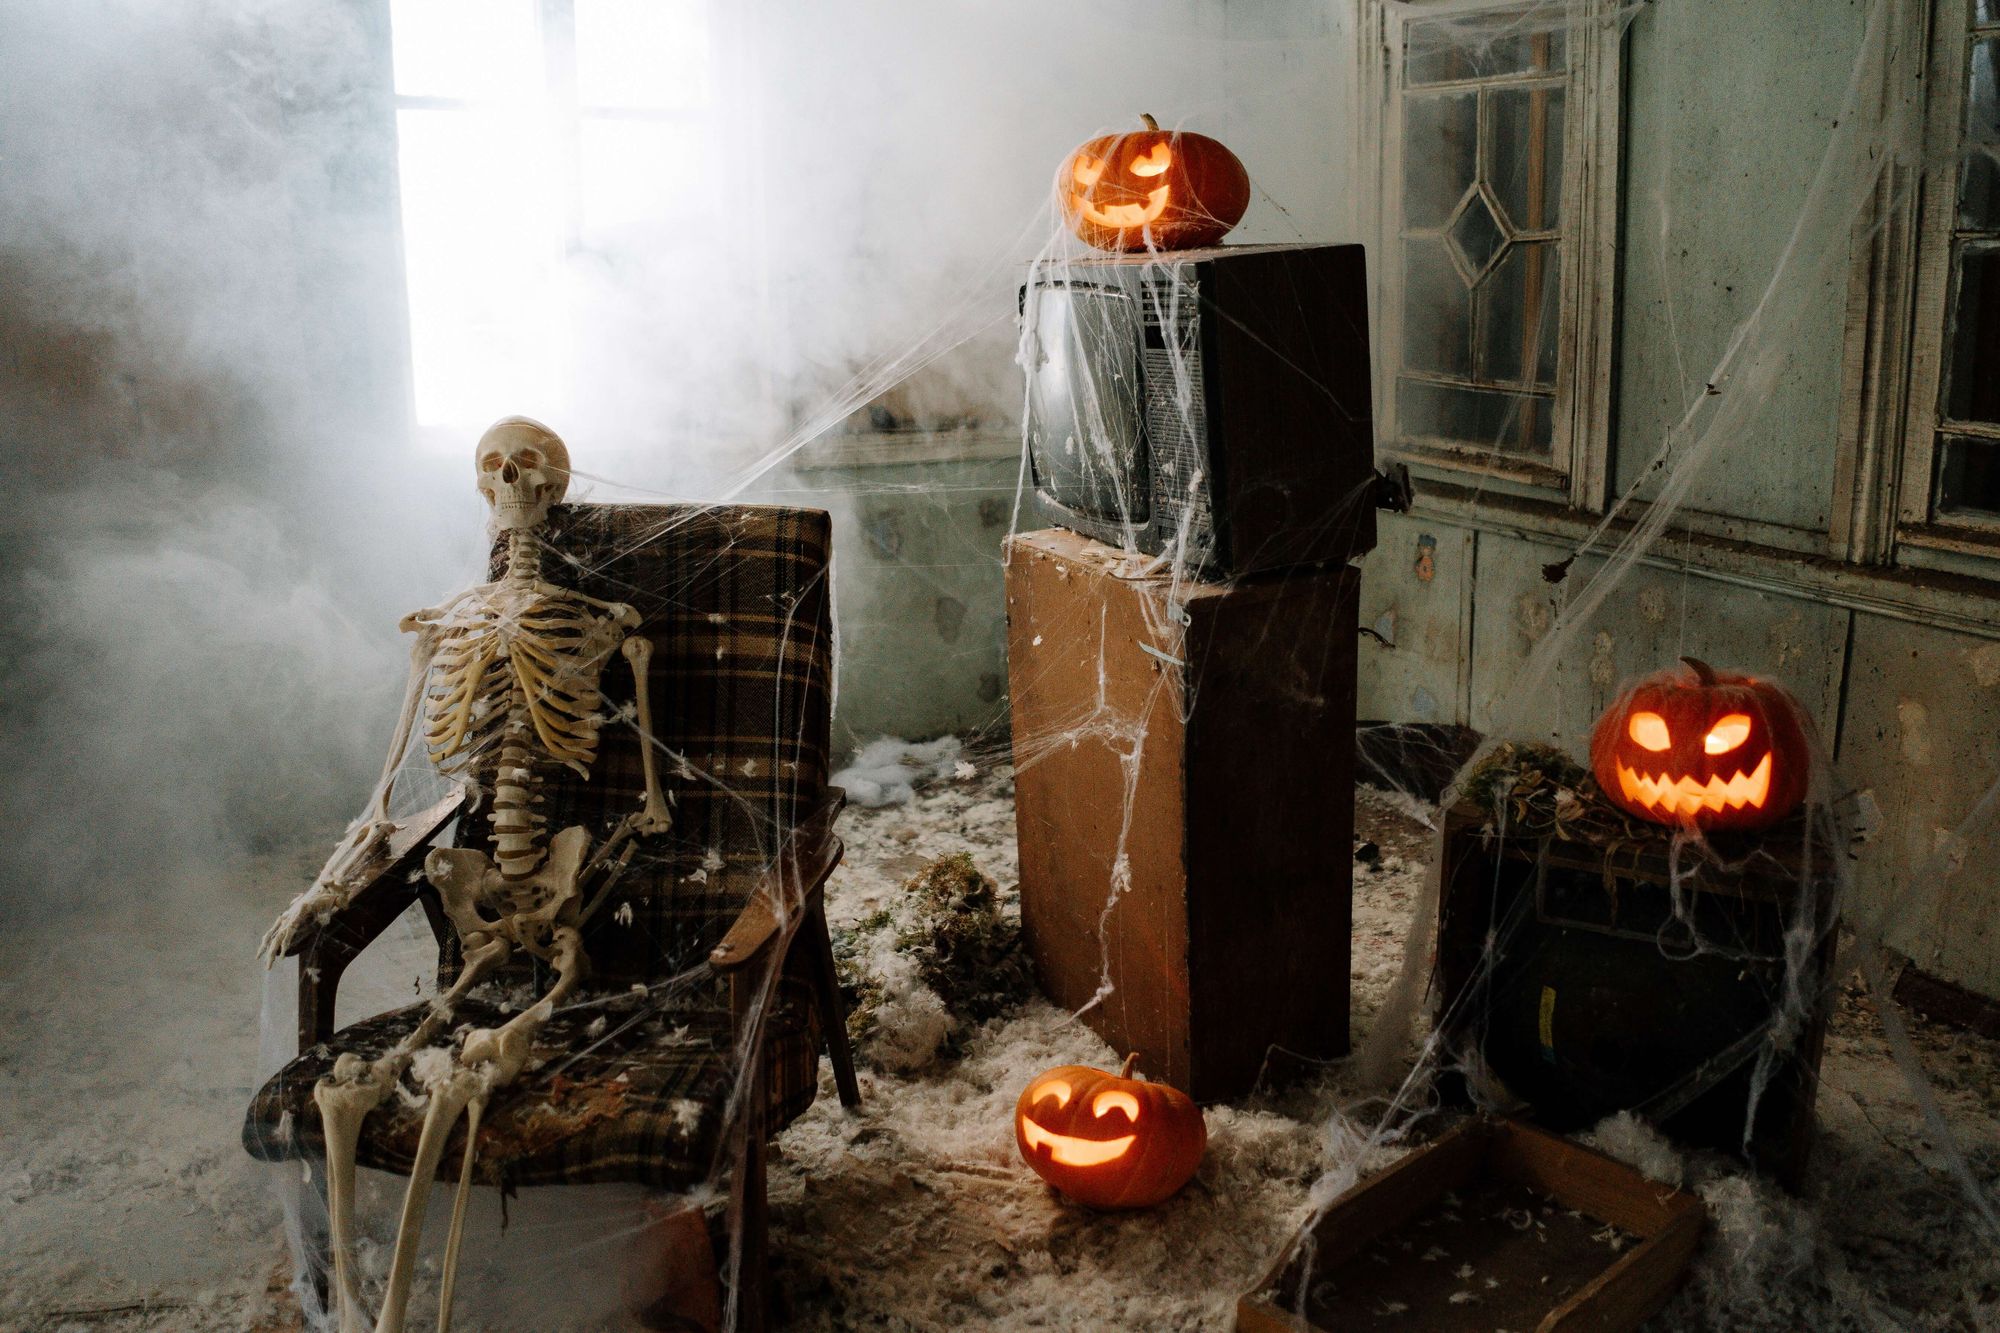 Spooky Halloween Scene!